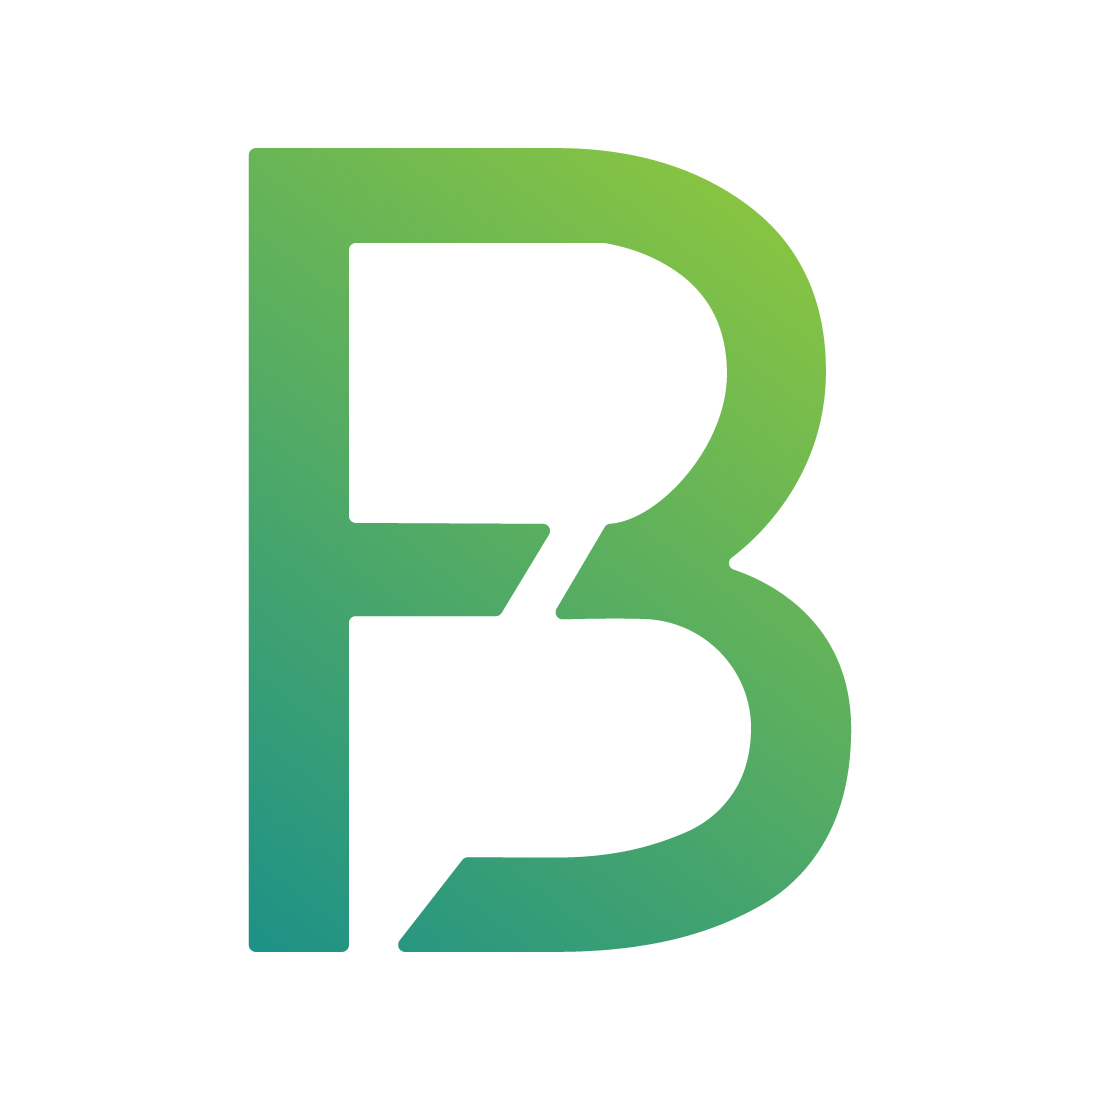 Initials FB letters logo design vector template arts FB logo design green color iconic design BF best logo monogram design preview image.